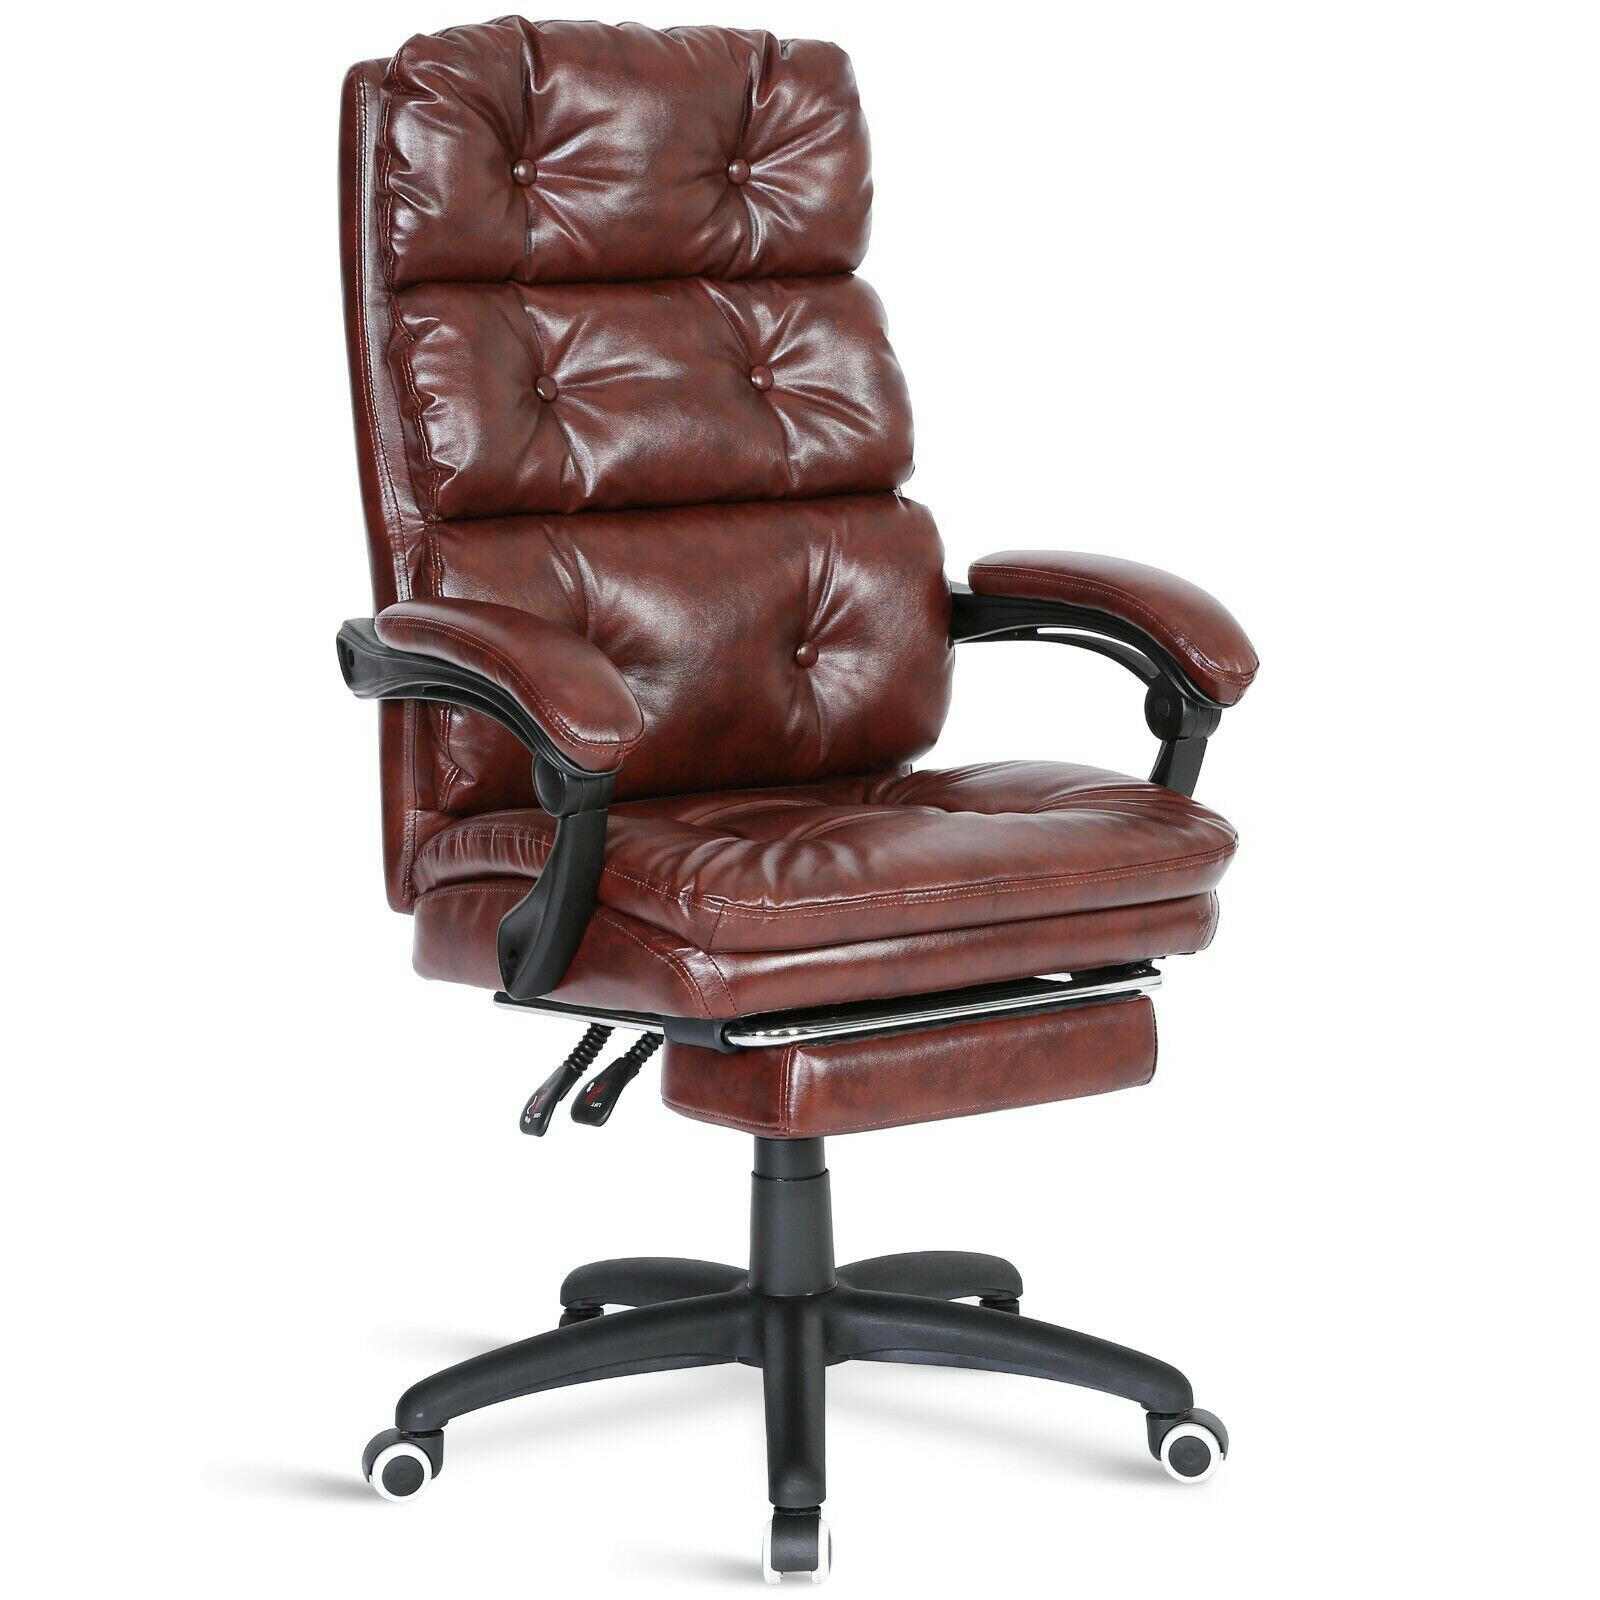 ergonomic study chair